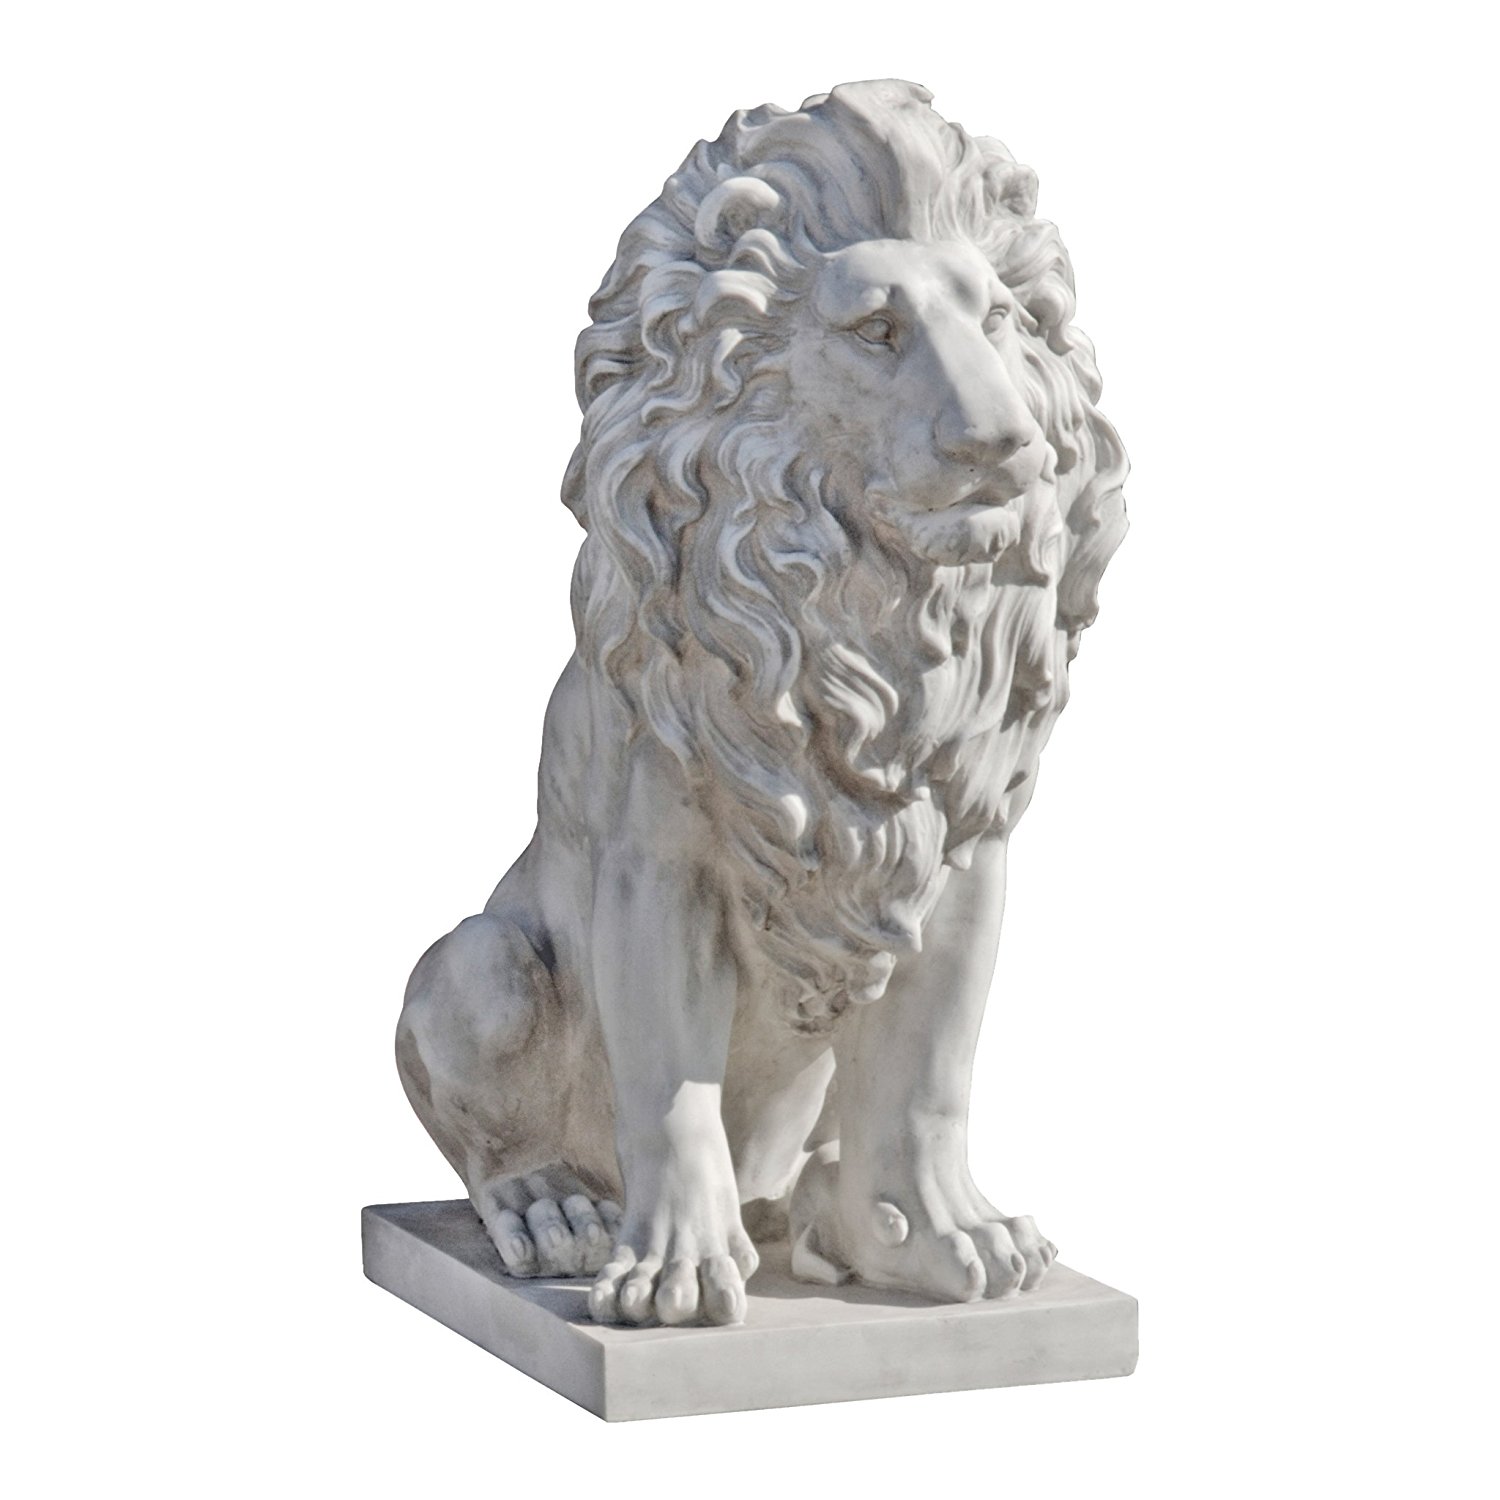 Amazon.com : Design Toscano KY71134 Lion of Florence Statue ...